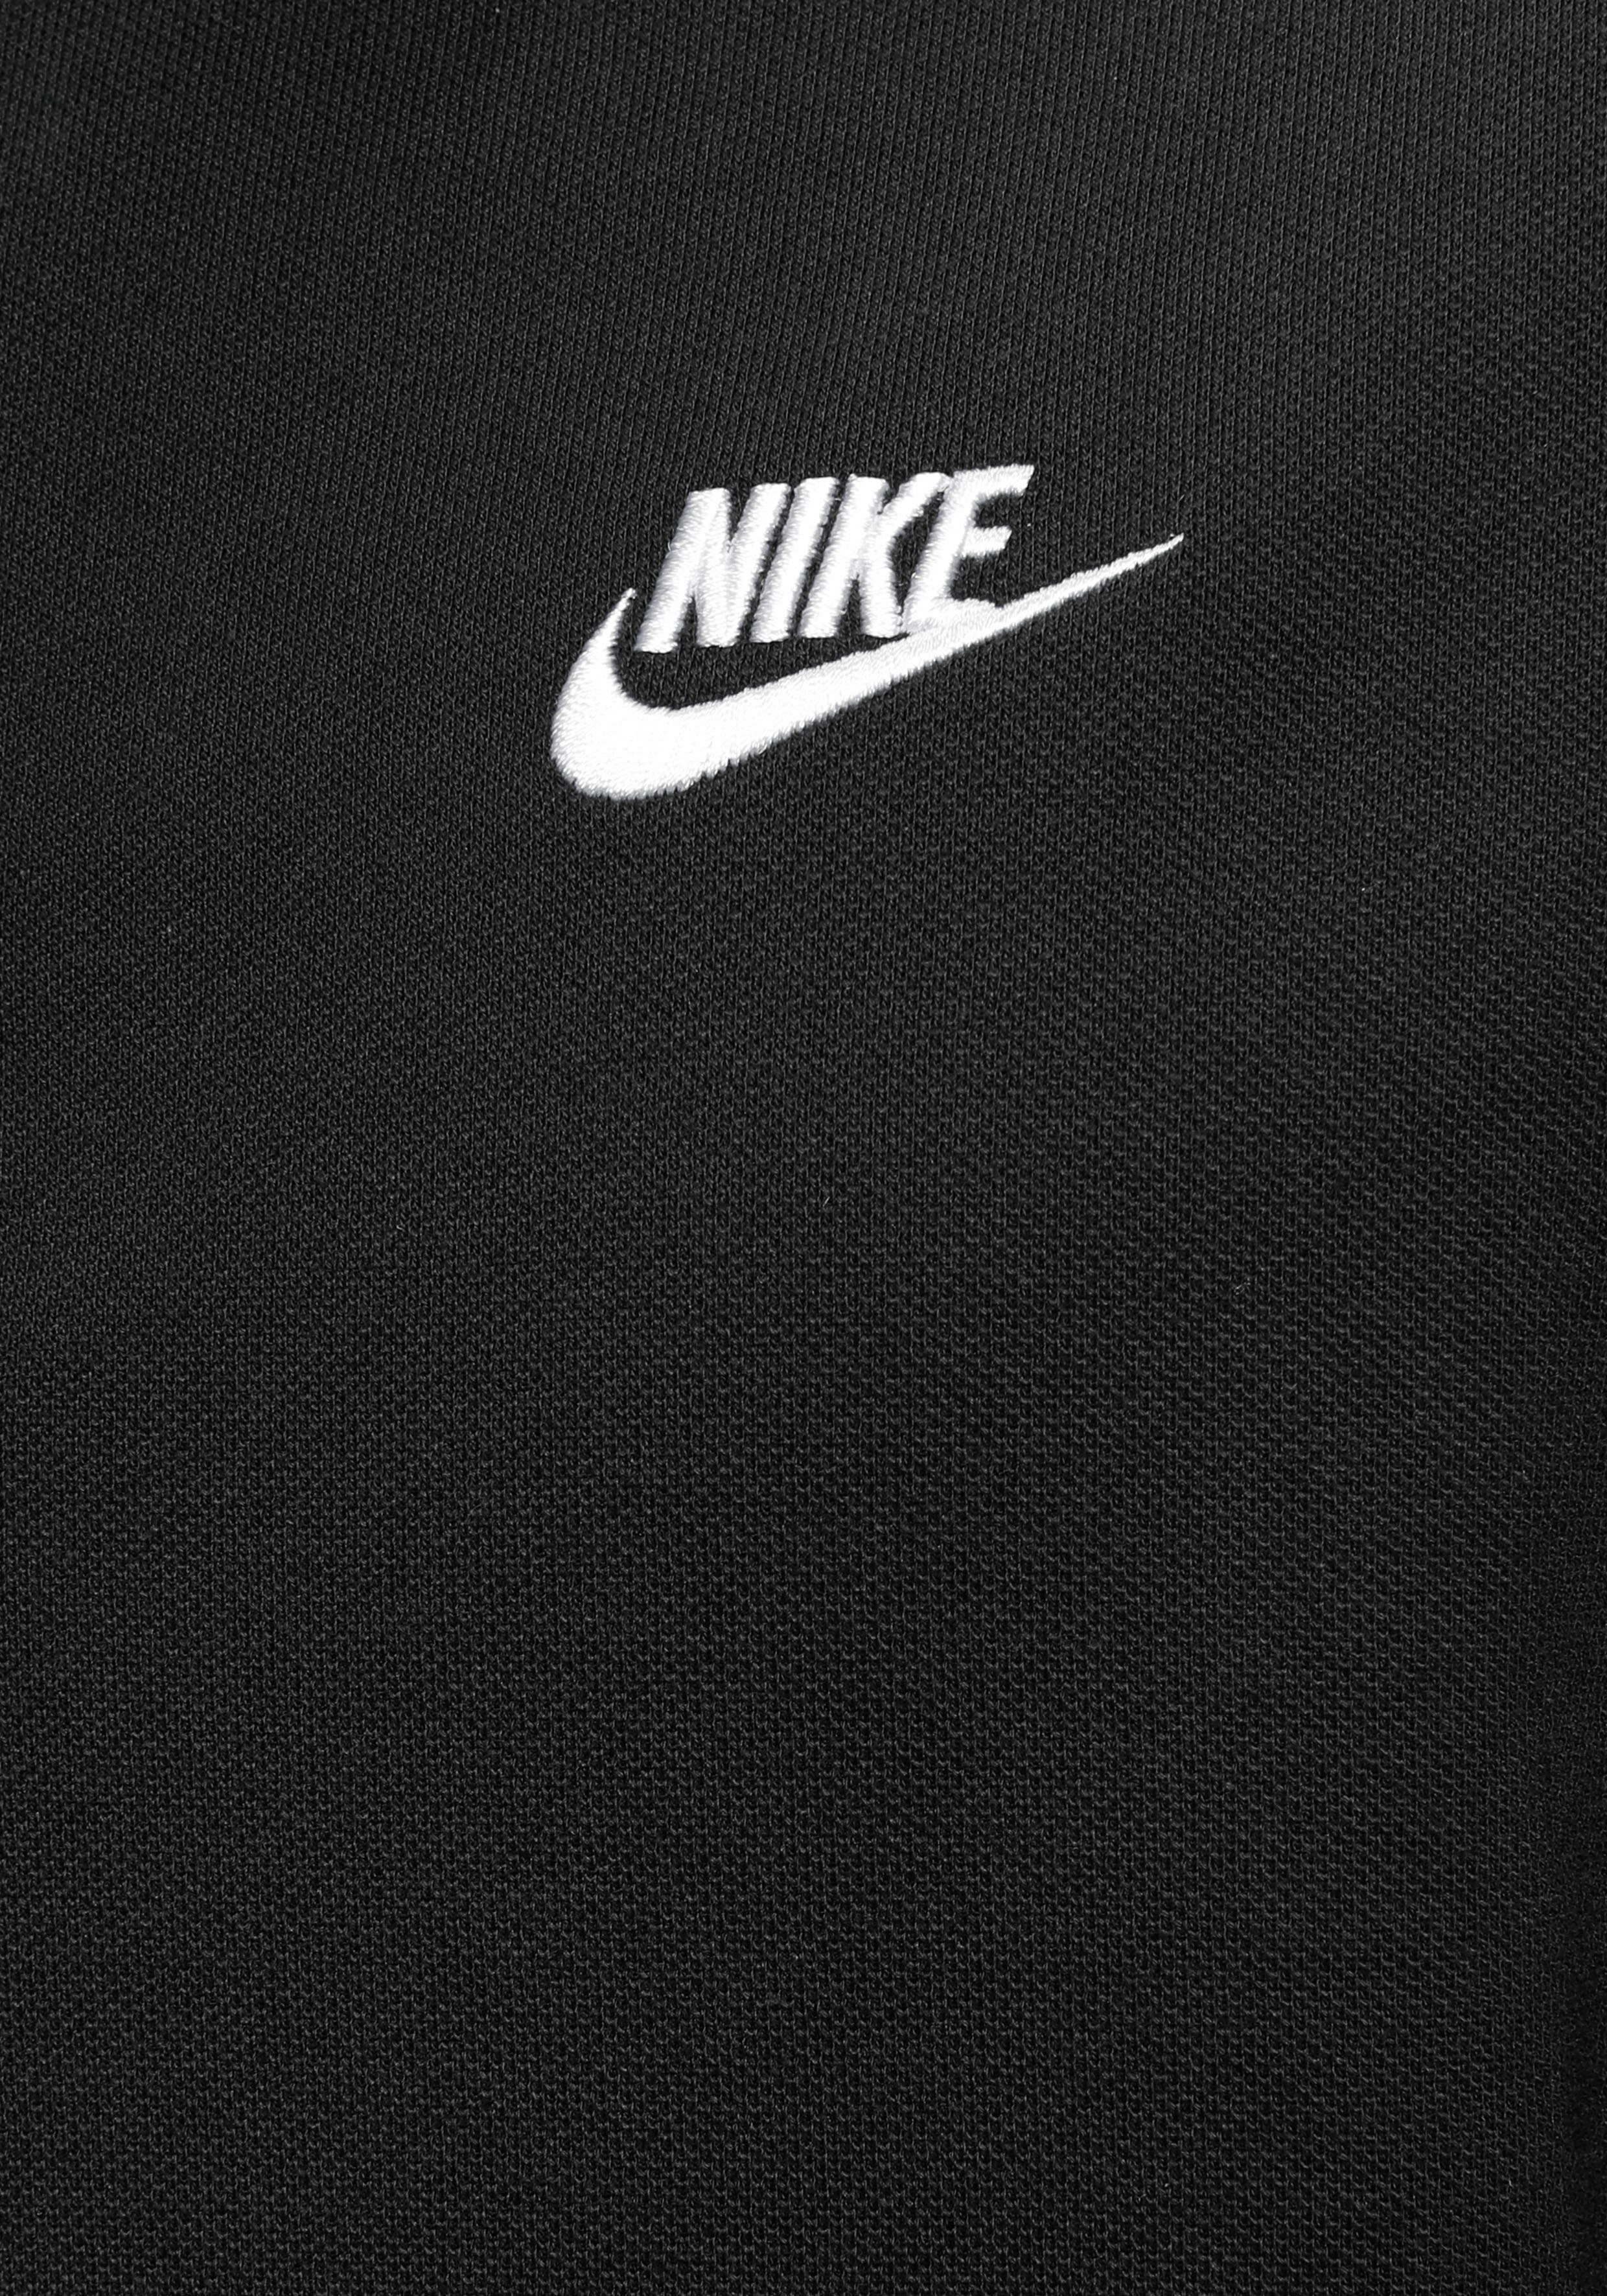 Men's schwarz Nike Sportswear Poloshirt Polo